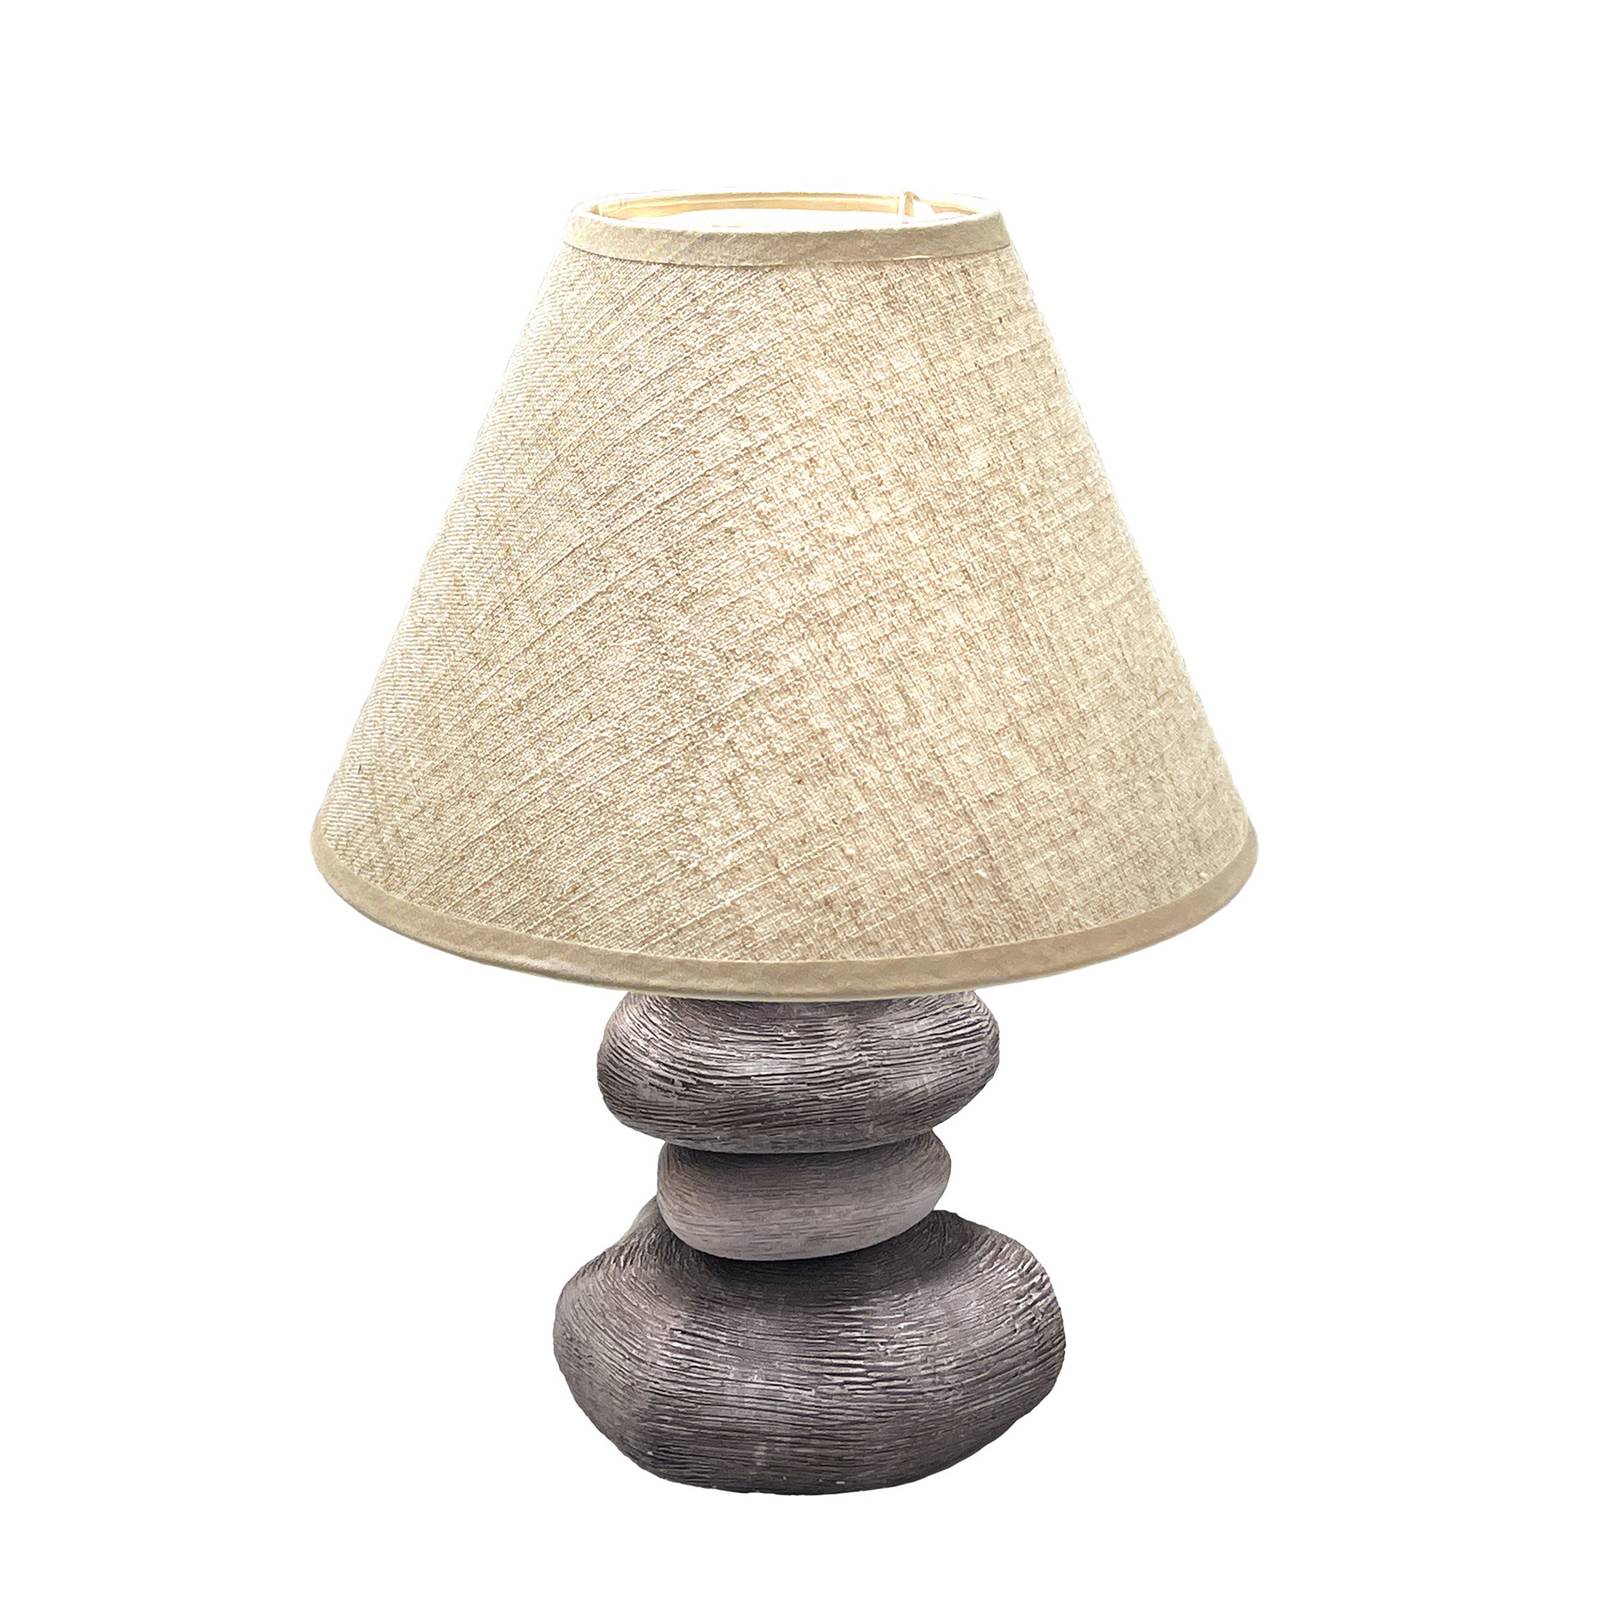 Image of Lampe à poser Bella, 33,5cm haut, brun/brun clair 4052231501654